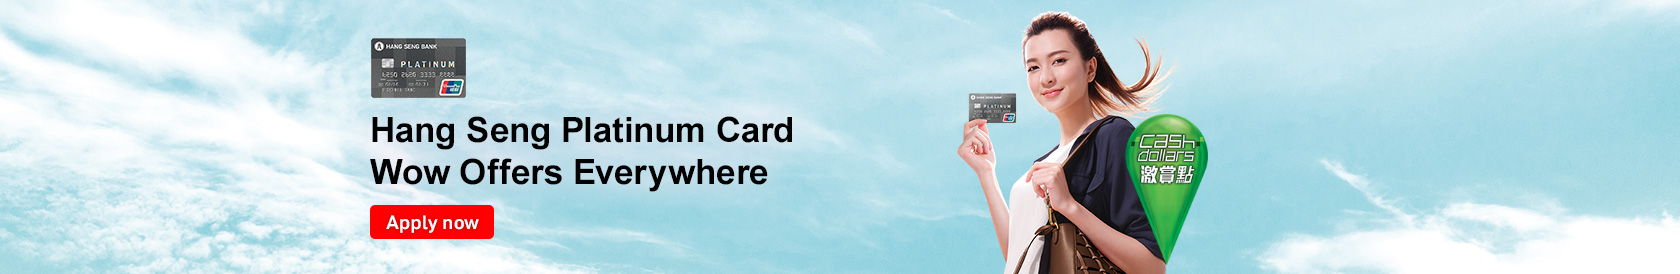 Hang Seng Platinum Card Wow Offers EVERYWHERE